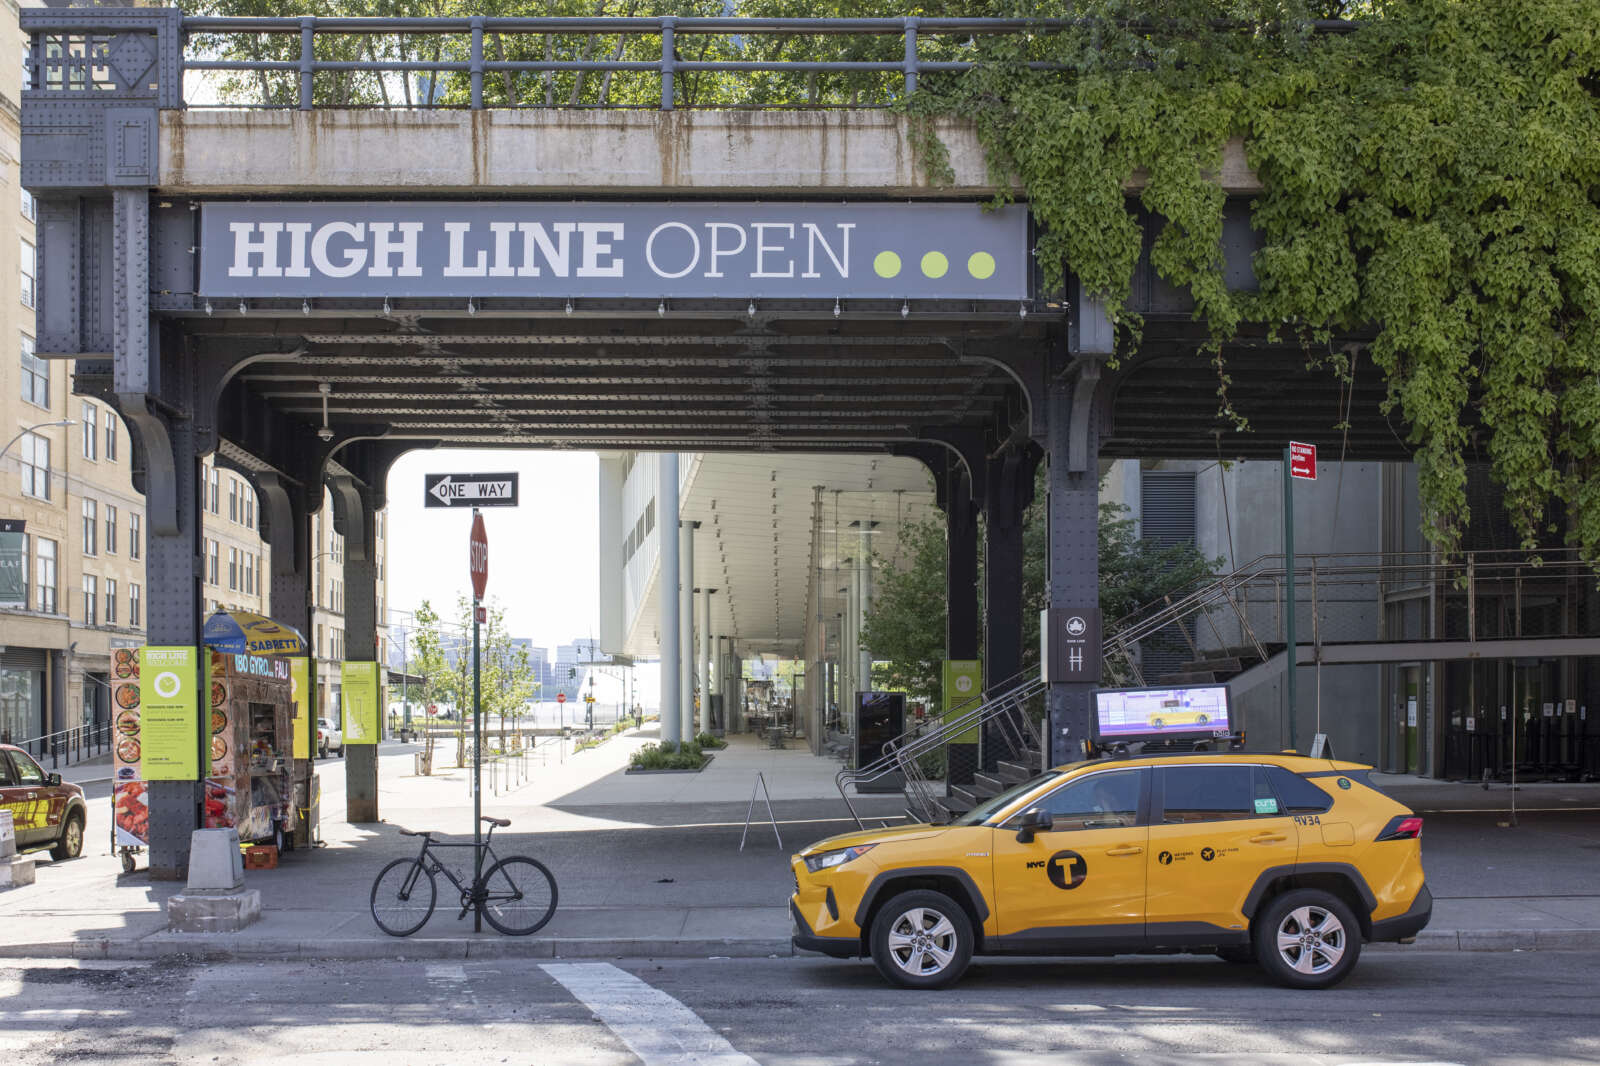 High Line Open sign